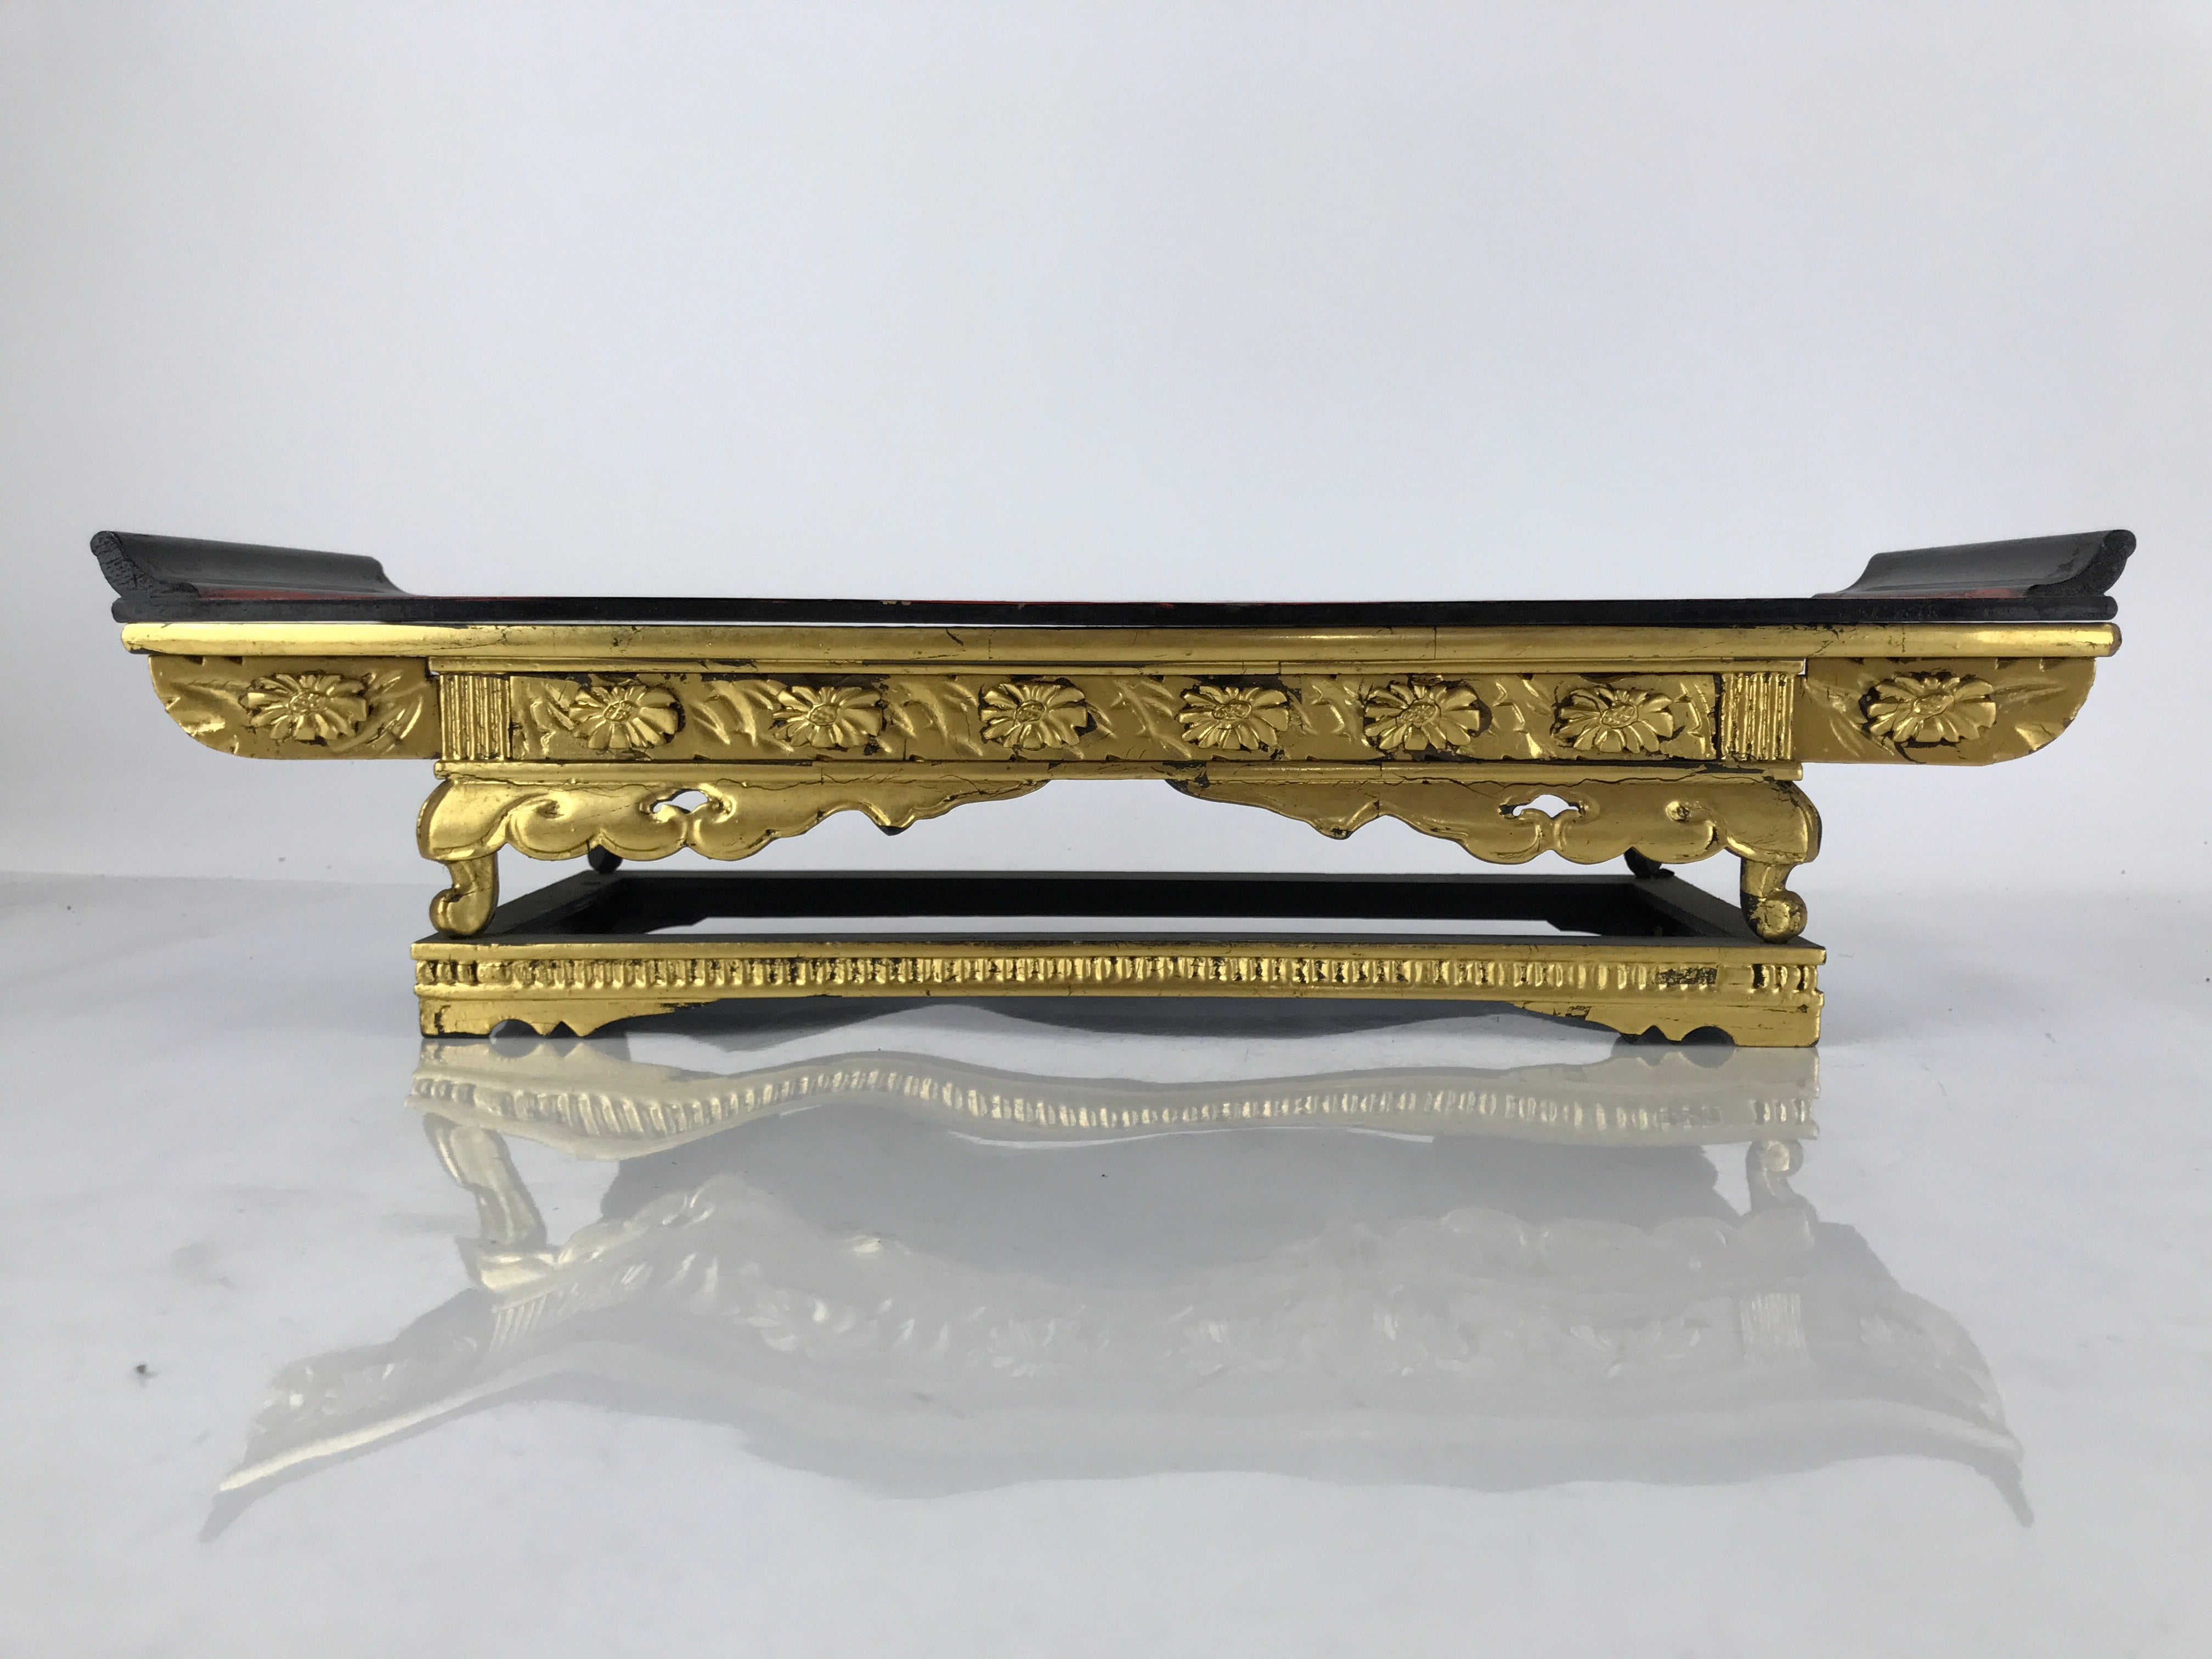 Japanese Buddhist Altar Wood Lacquer Offering Table Vtg Maejoku Black Gold BA300